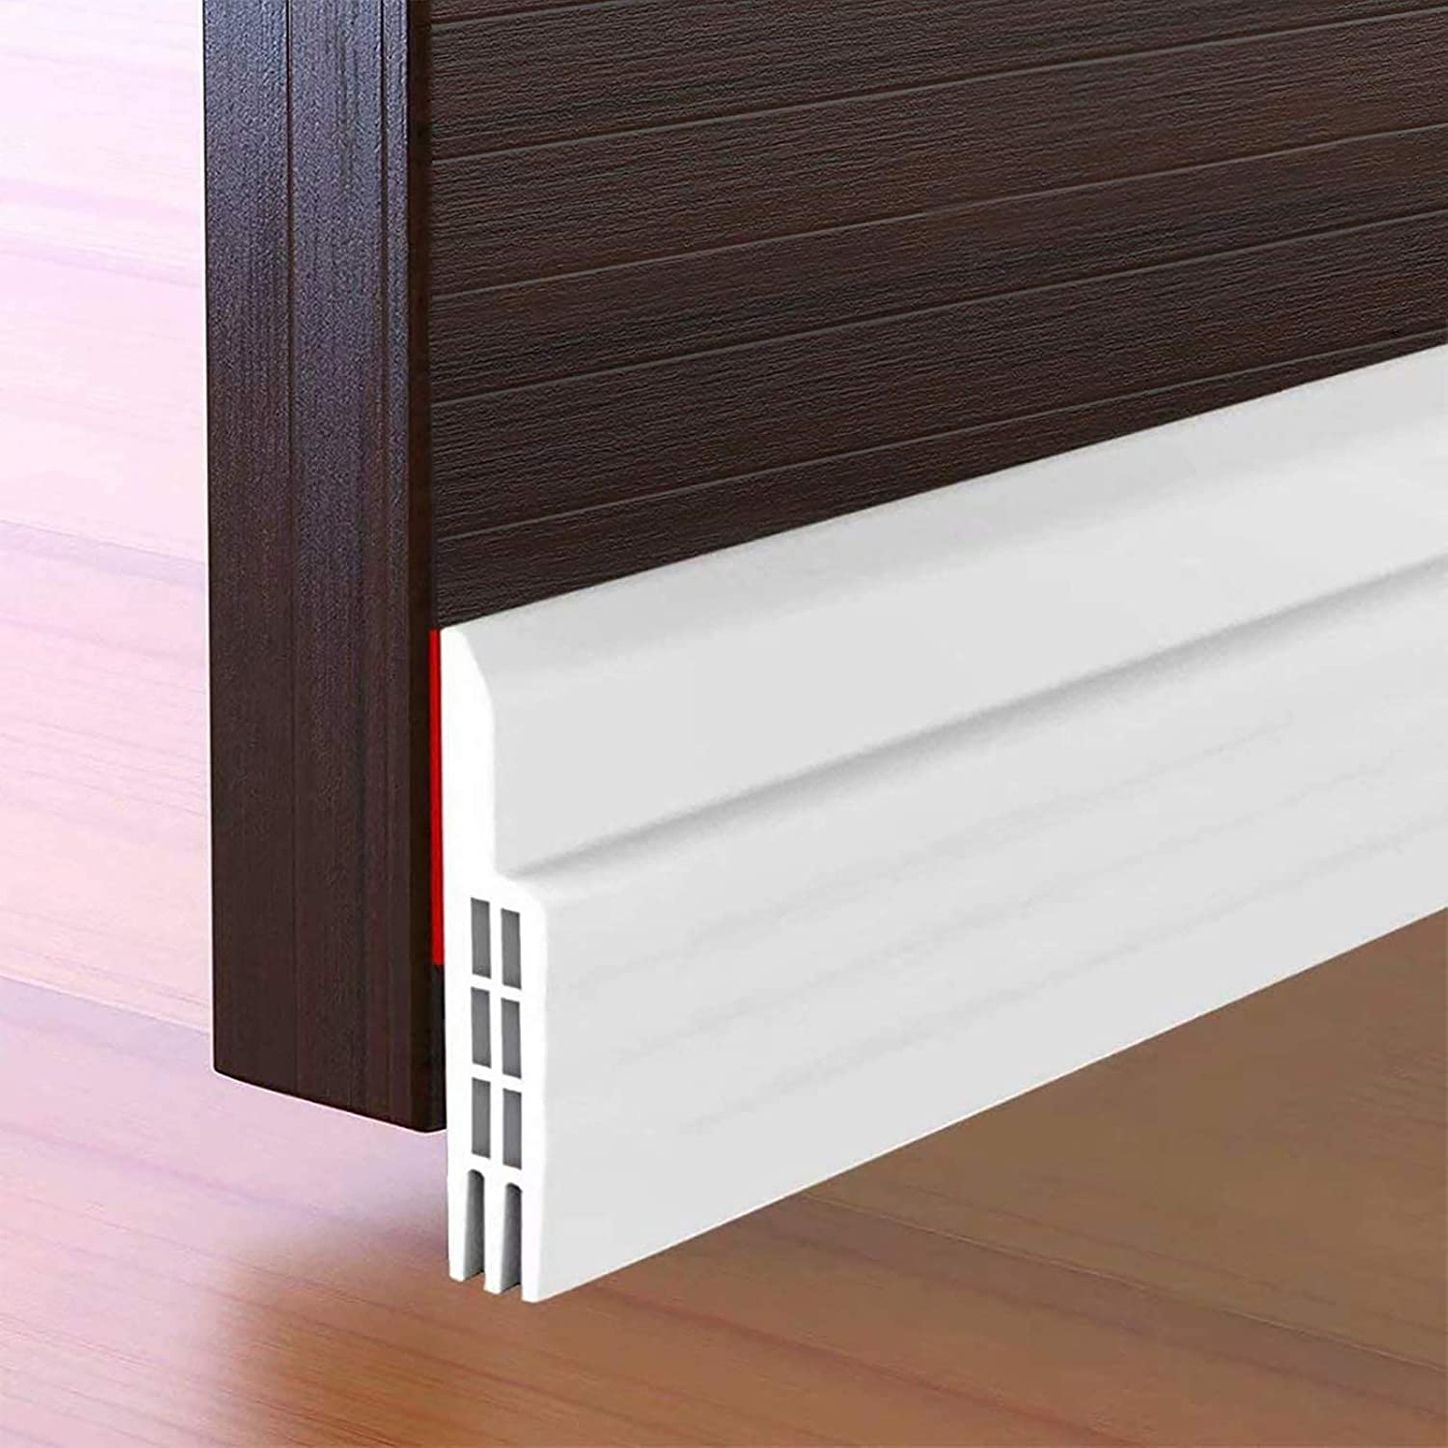 Door Draft & Dust Stopper – Retain room temperature